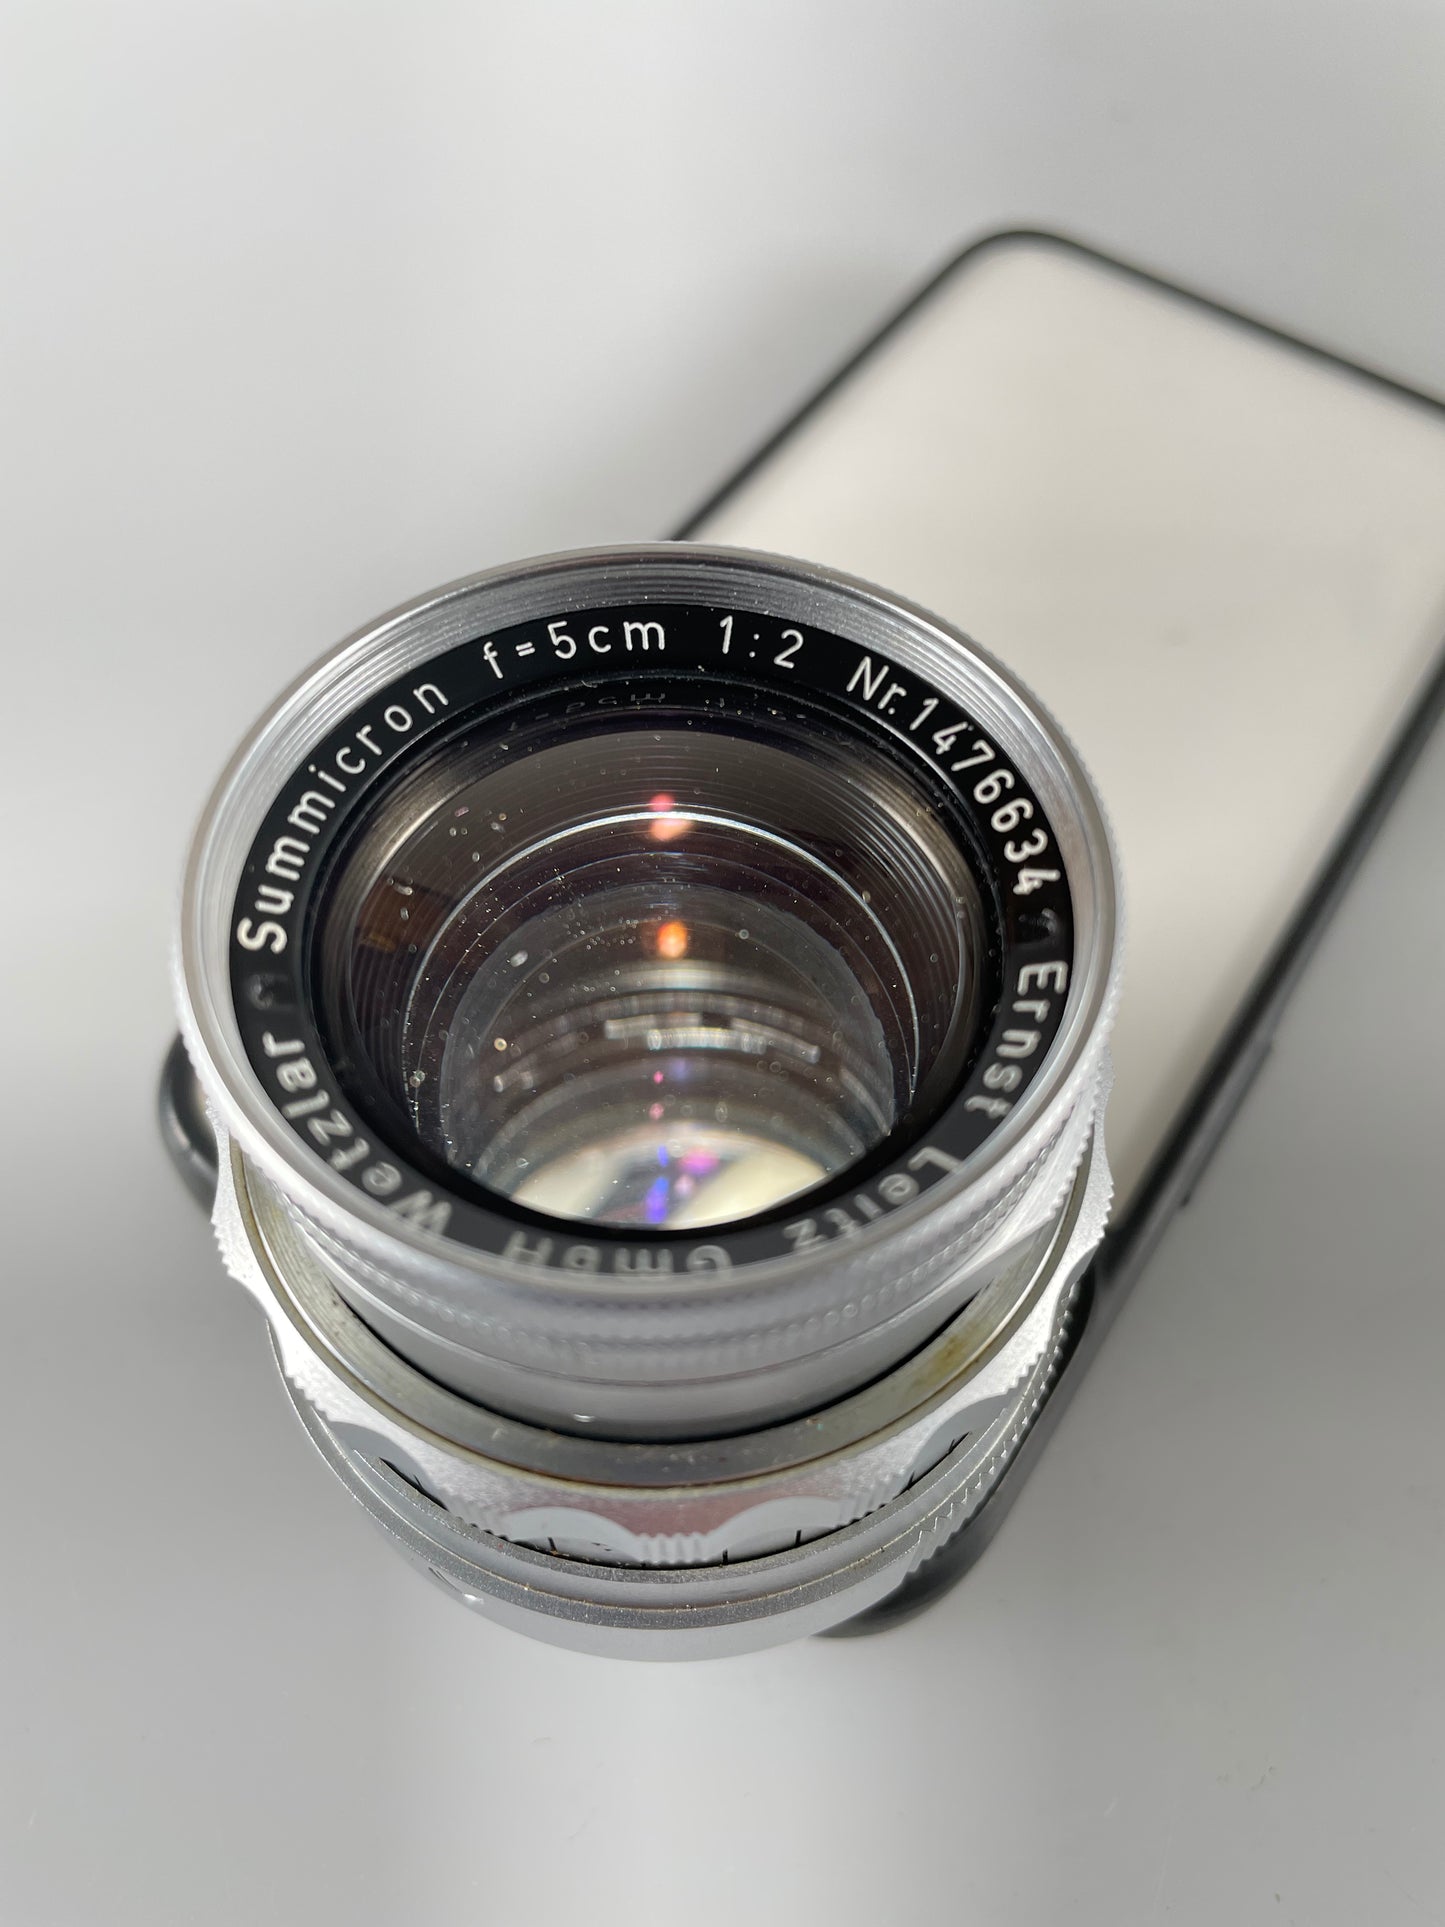 Leica Leitz Wetzlar Summicron-M 50mm F2 Dual Range DR f2 Lens Rigid